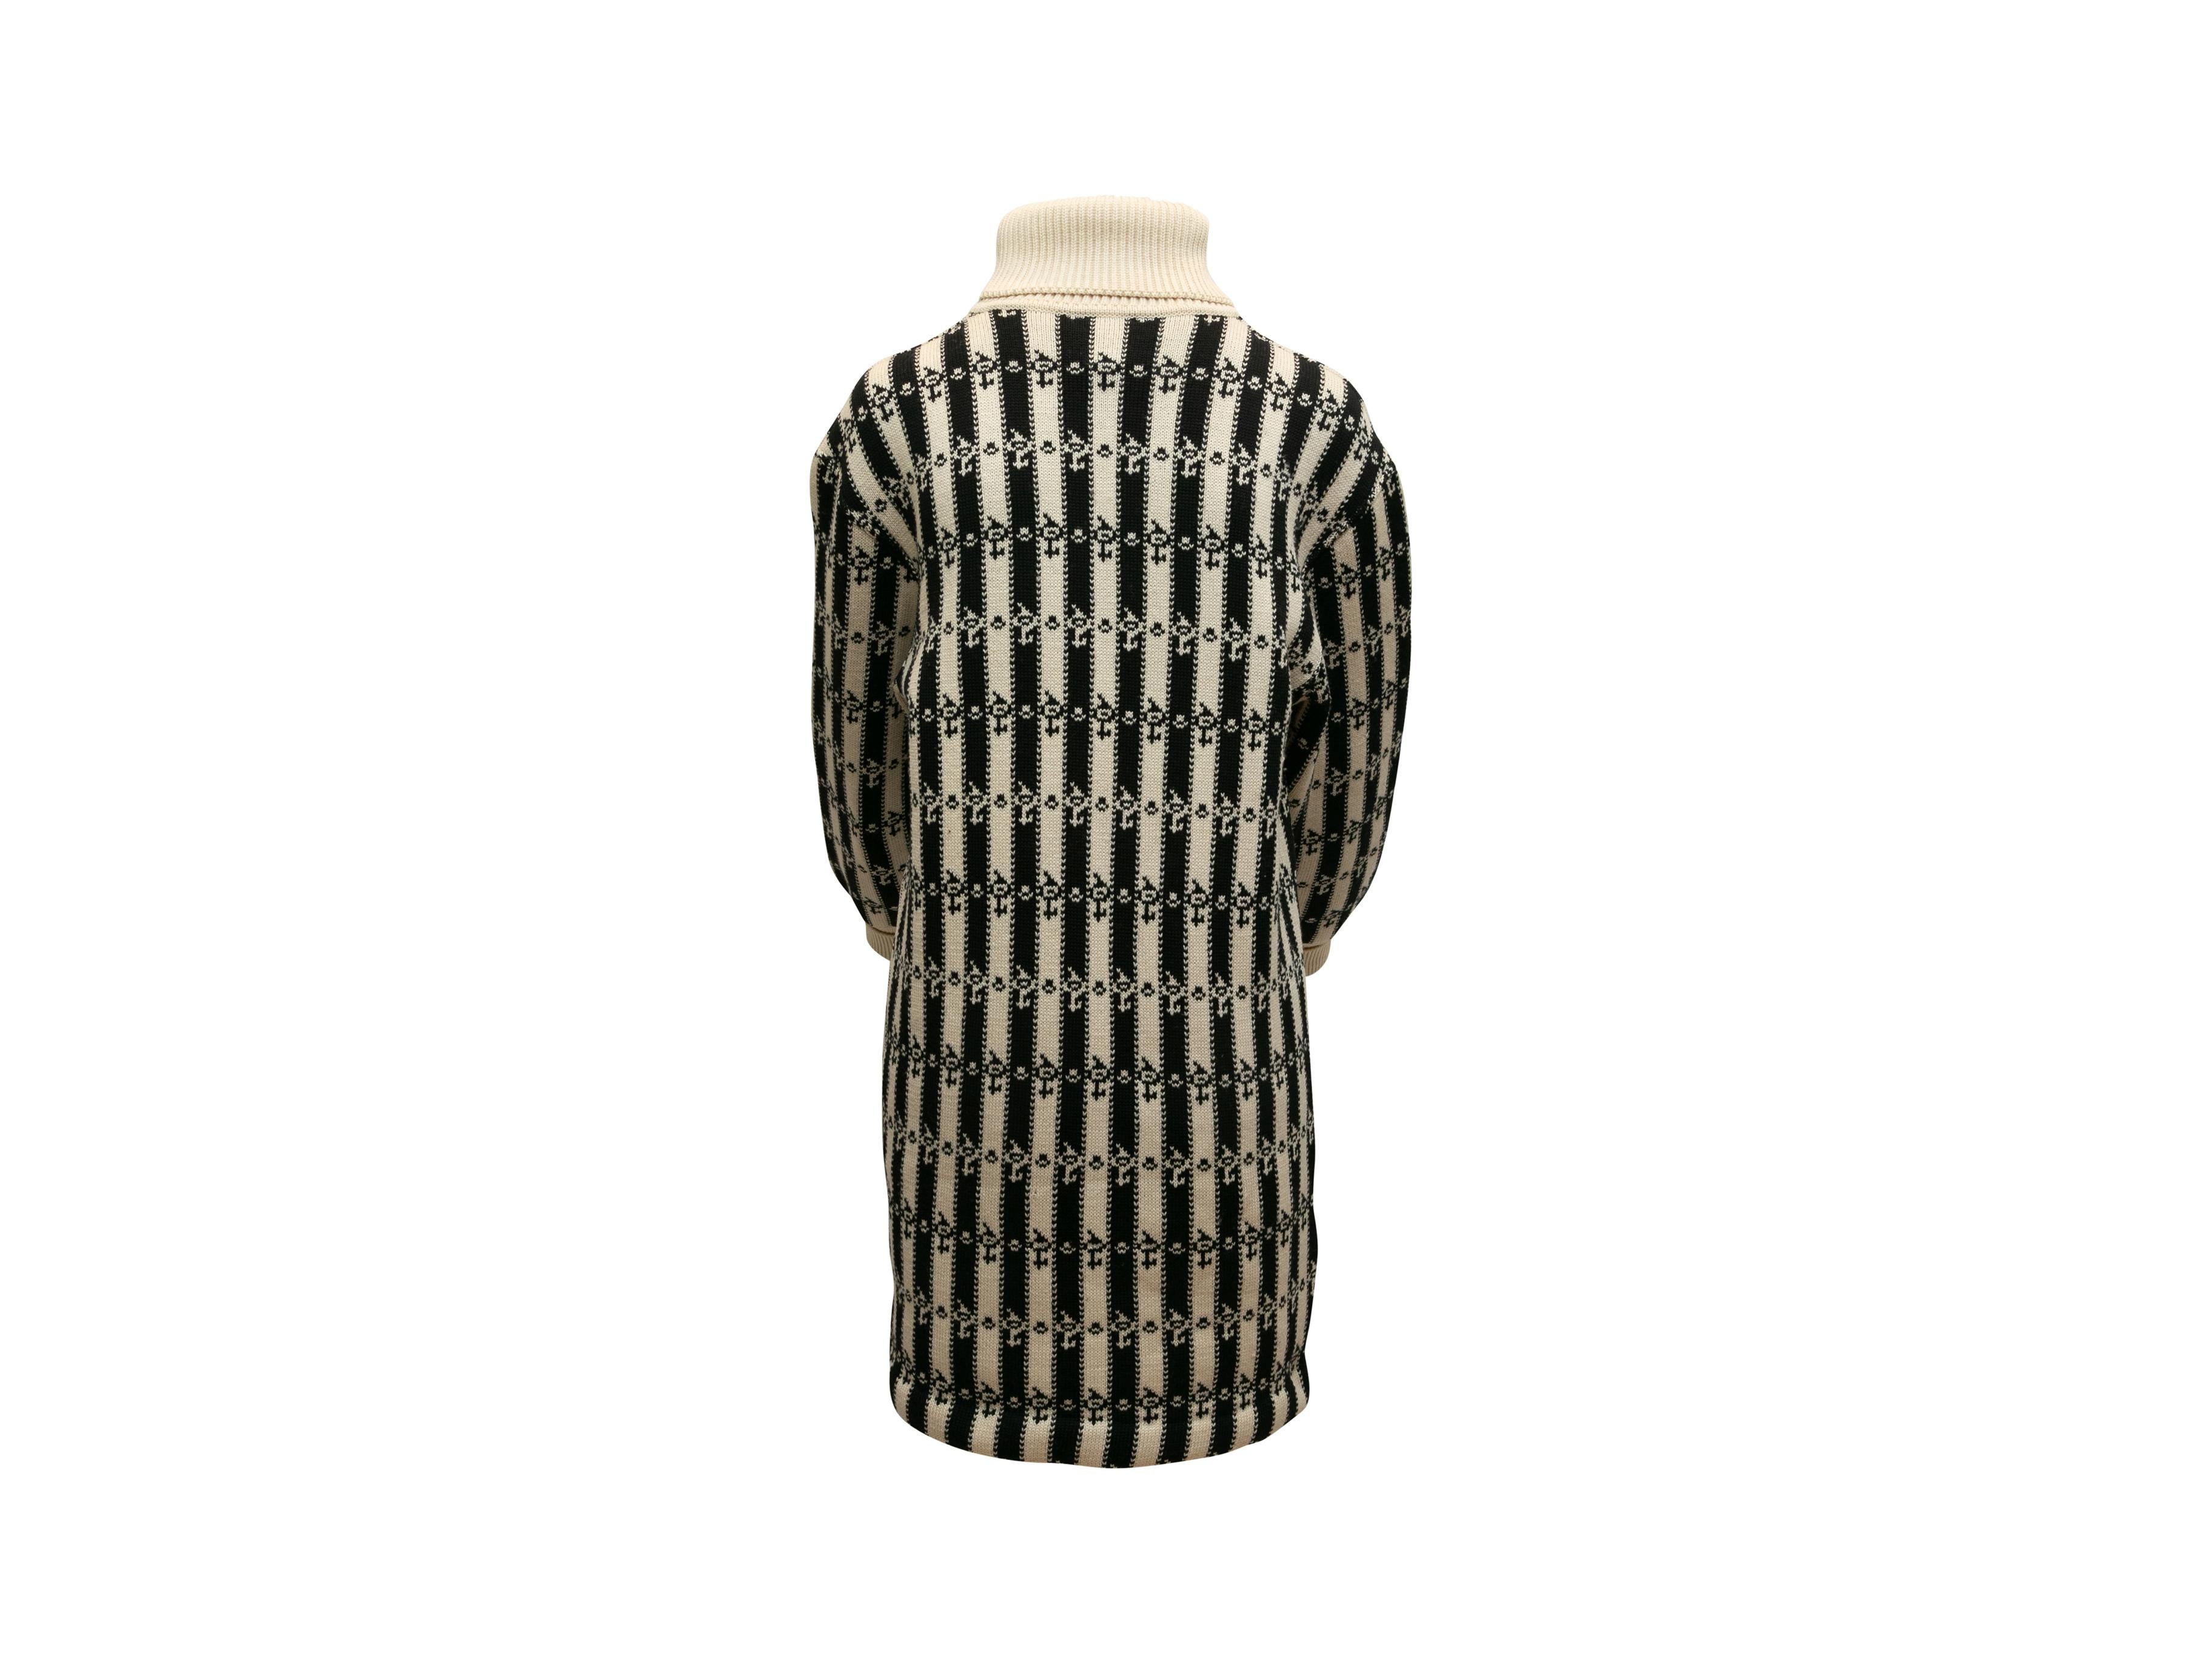 Chanel White & Black Boutique Sweater Dress 1